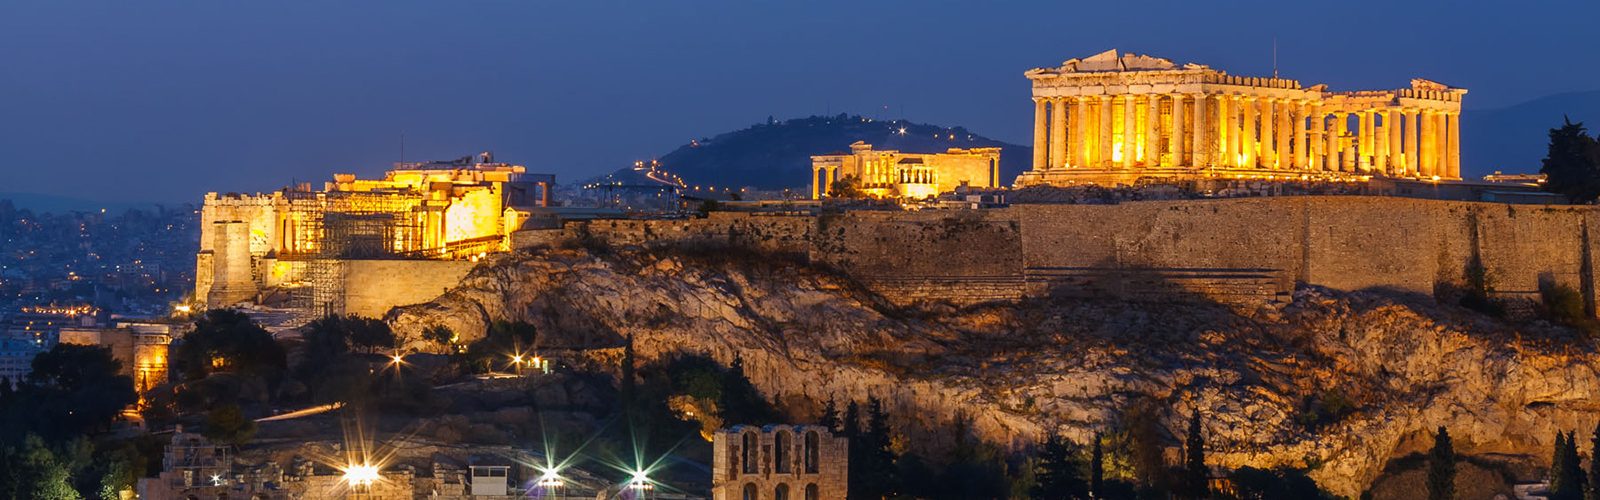 acropolis-and-the-parthenon-at-night2